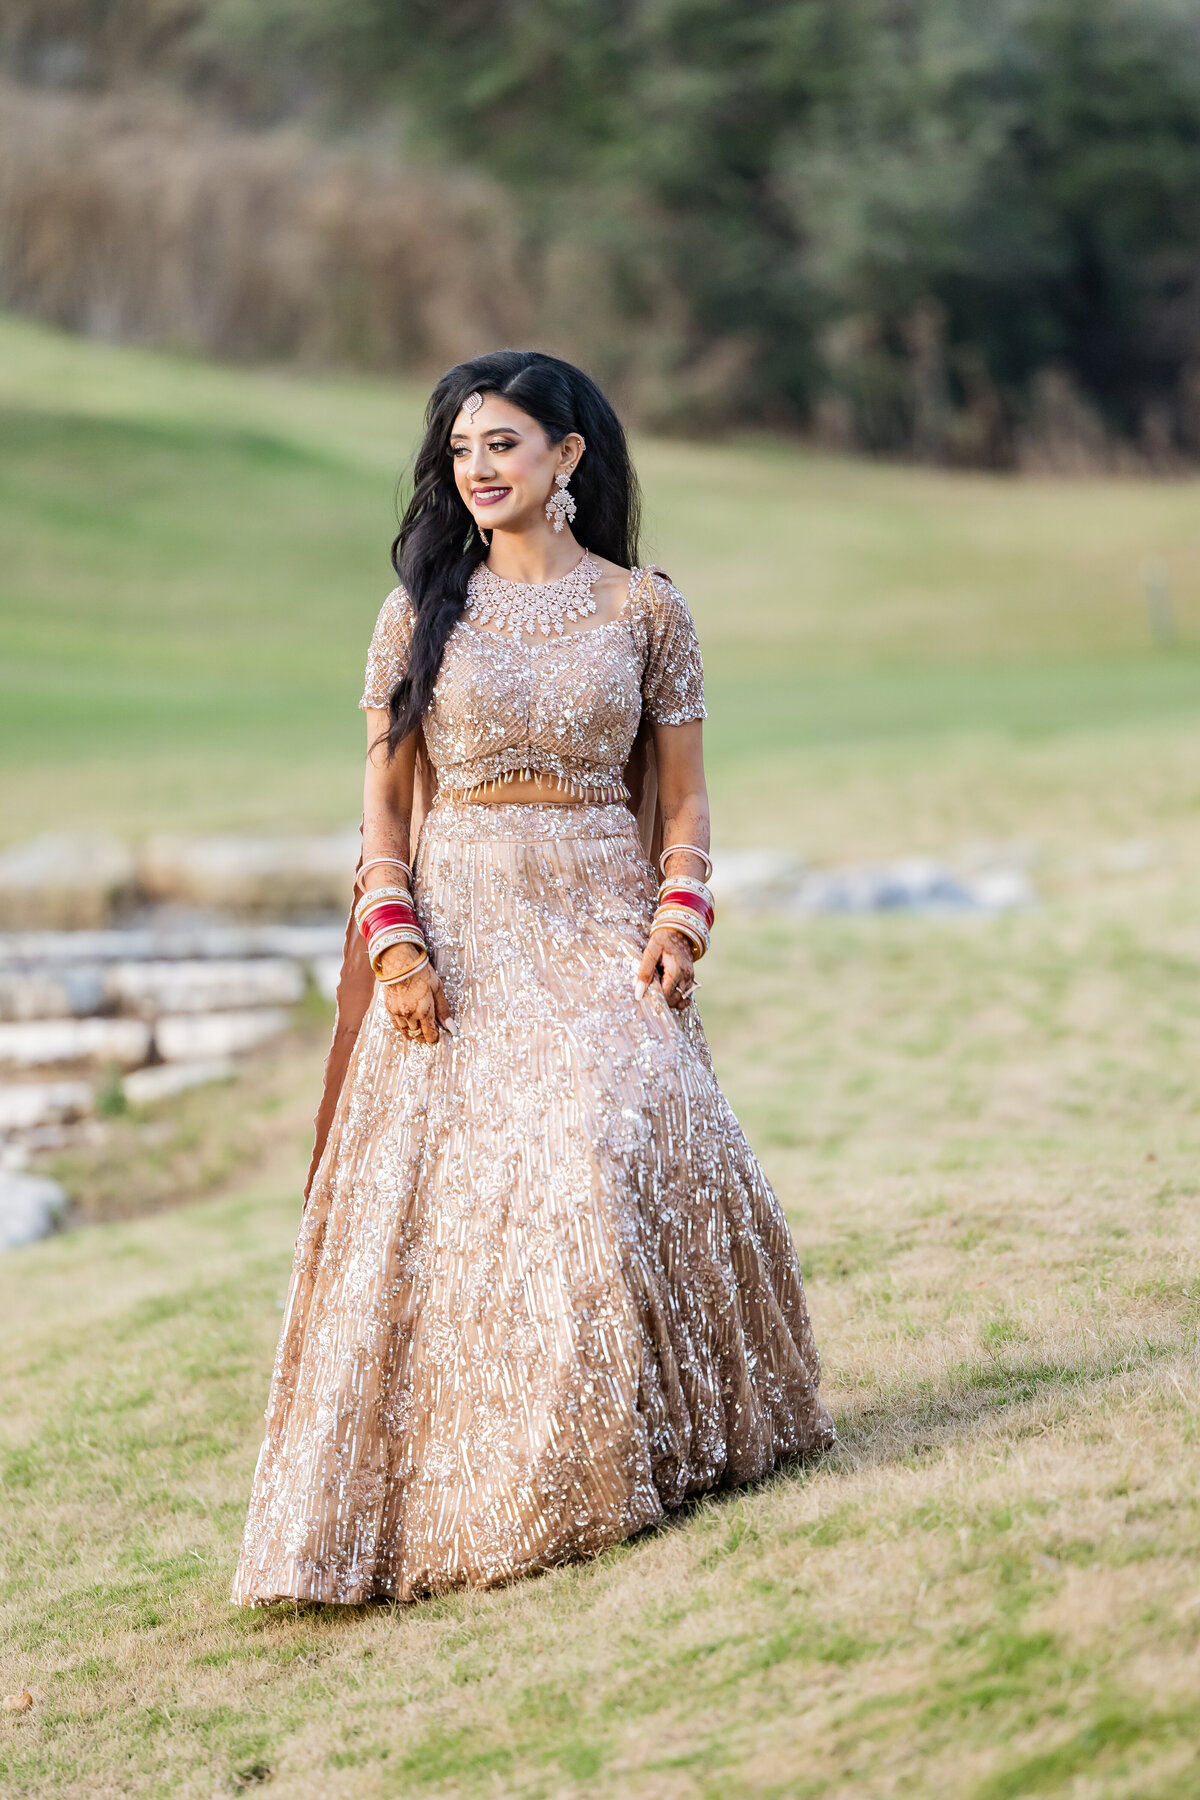 Dallas_Indian_Wedding_Photographer